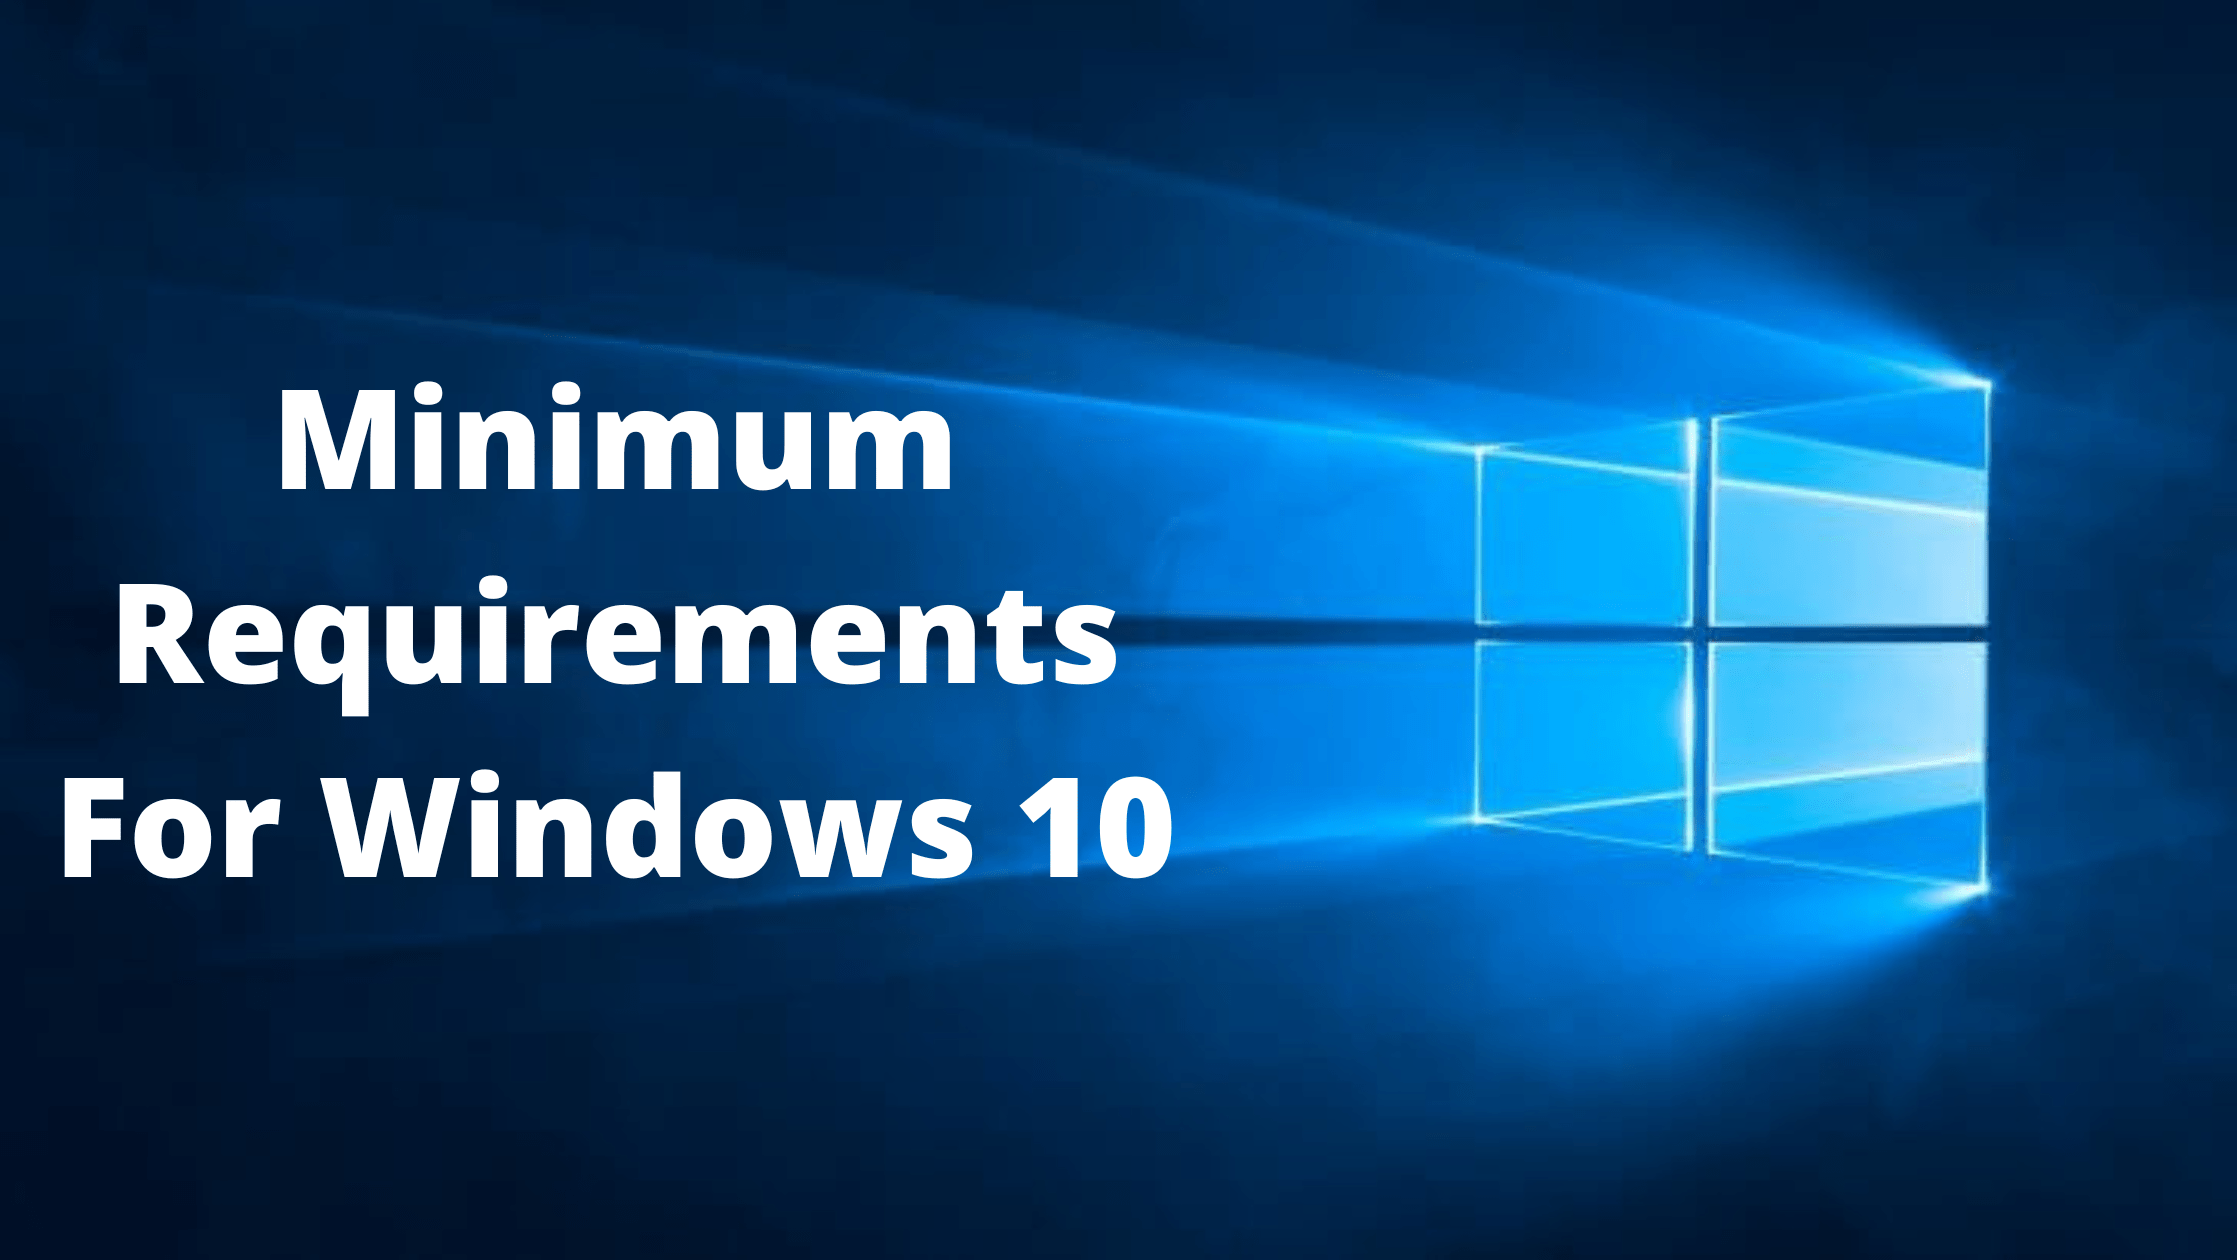 Minimum Requirements for Windows 10